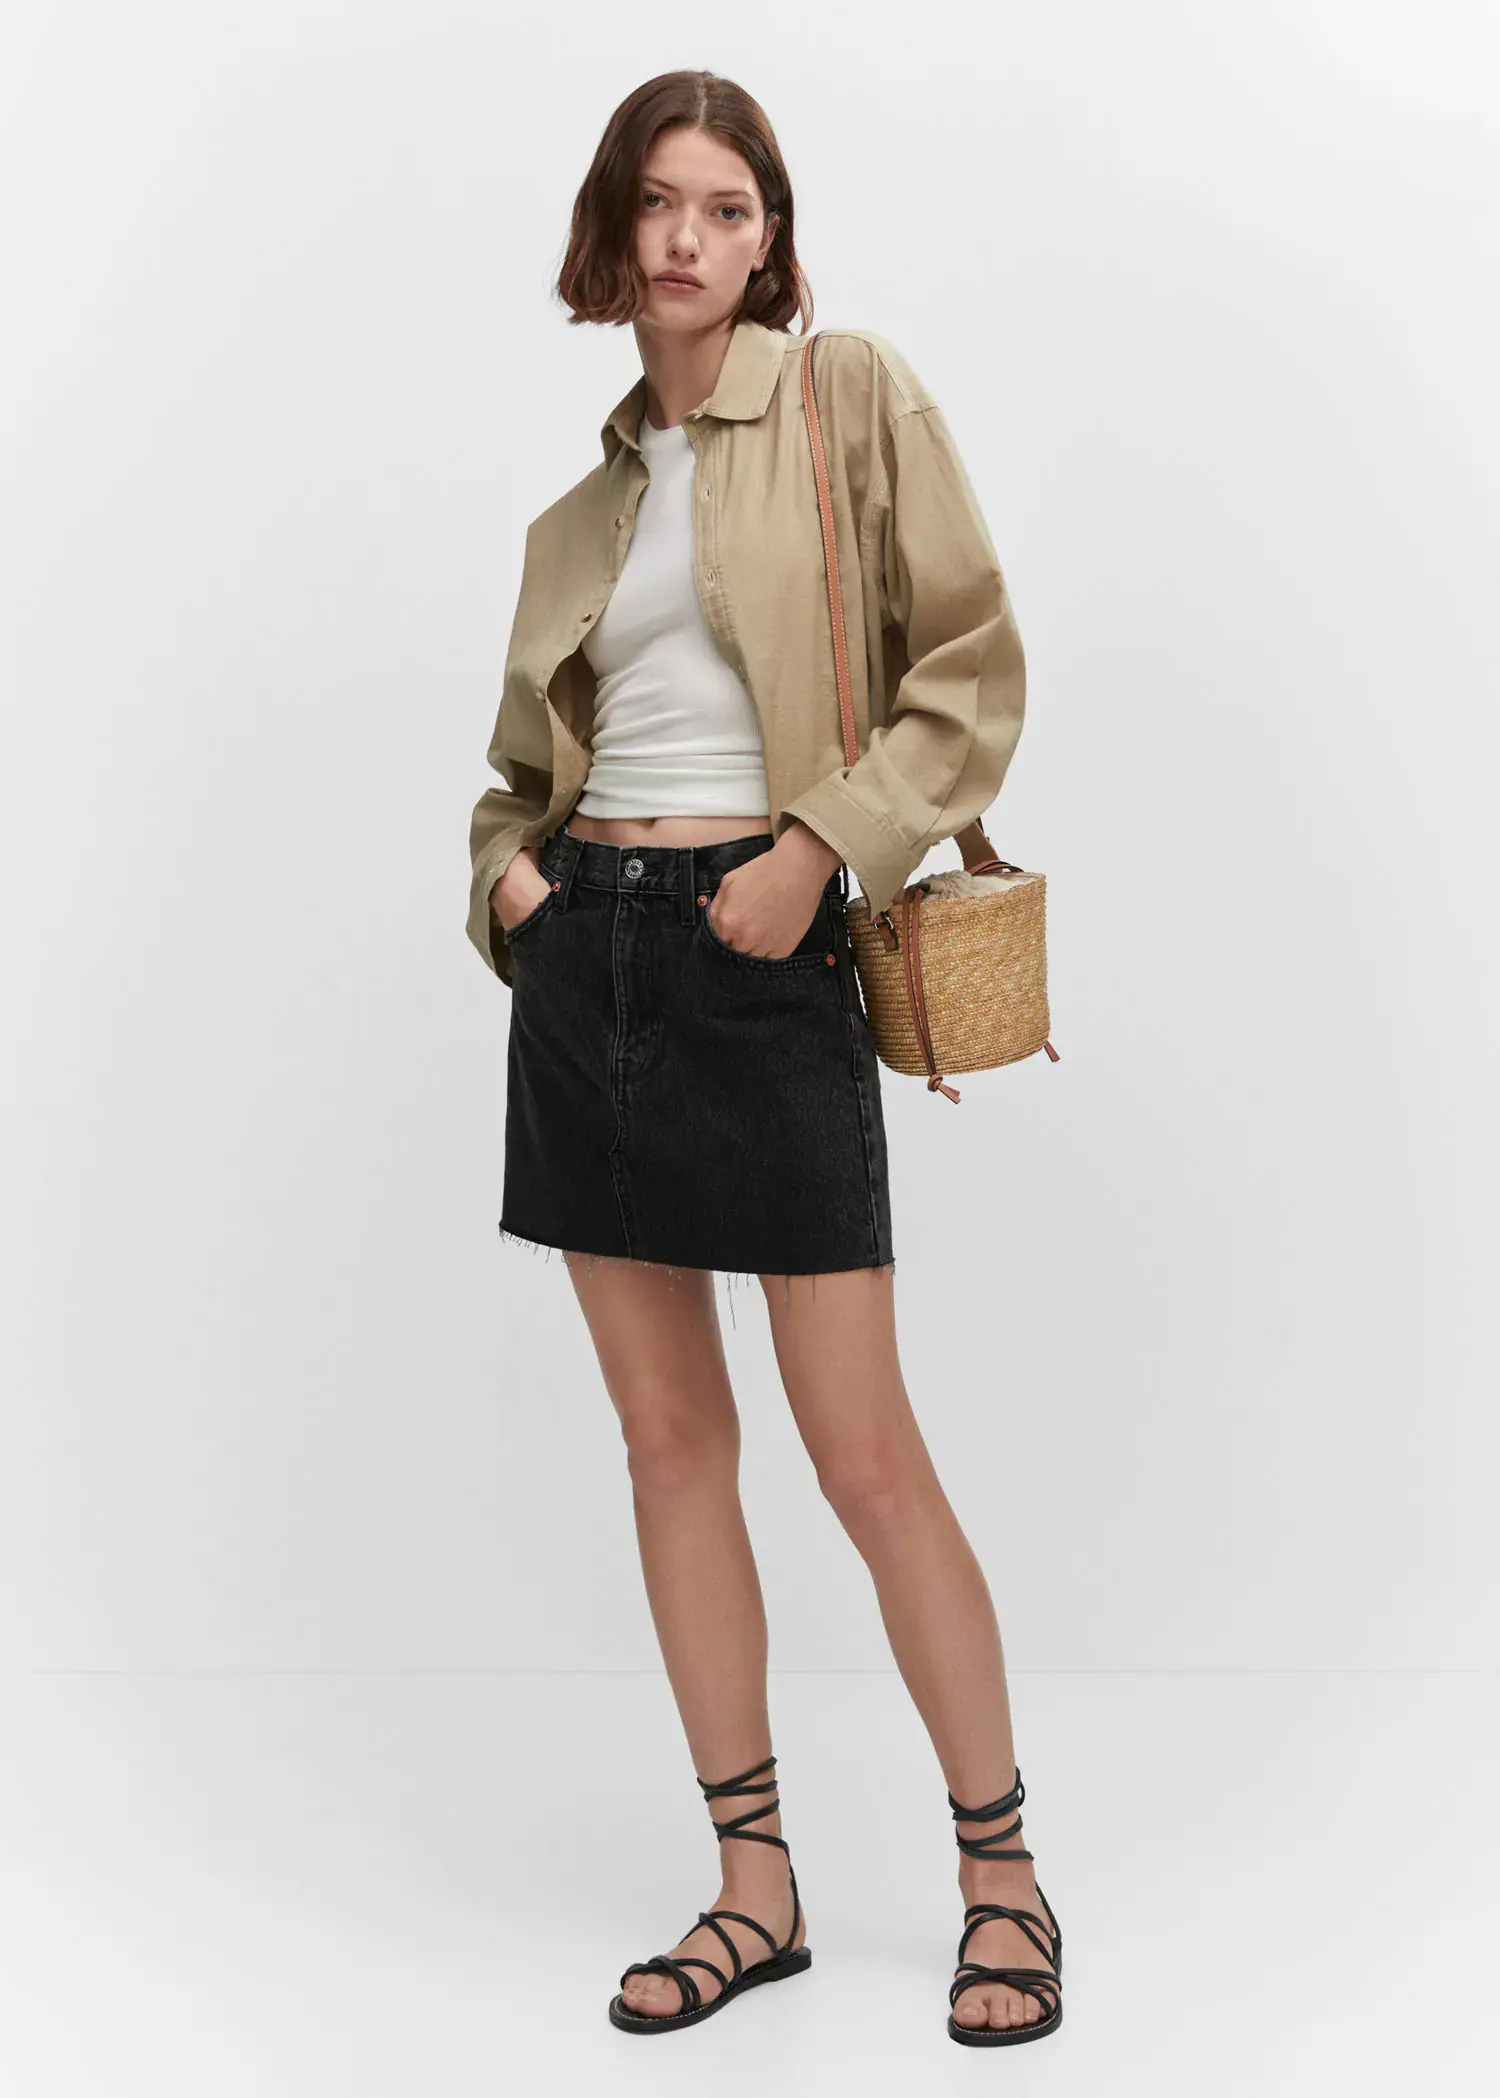 Mango Denim mini-skirt. a woman in a tan jacket and black skirt holding a purse. 